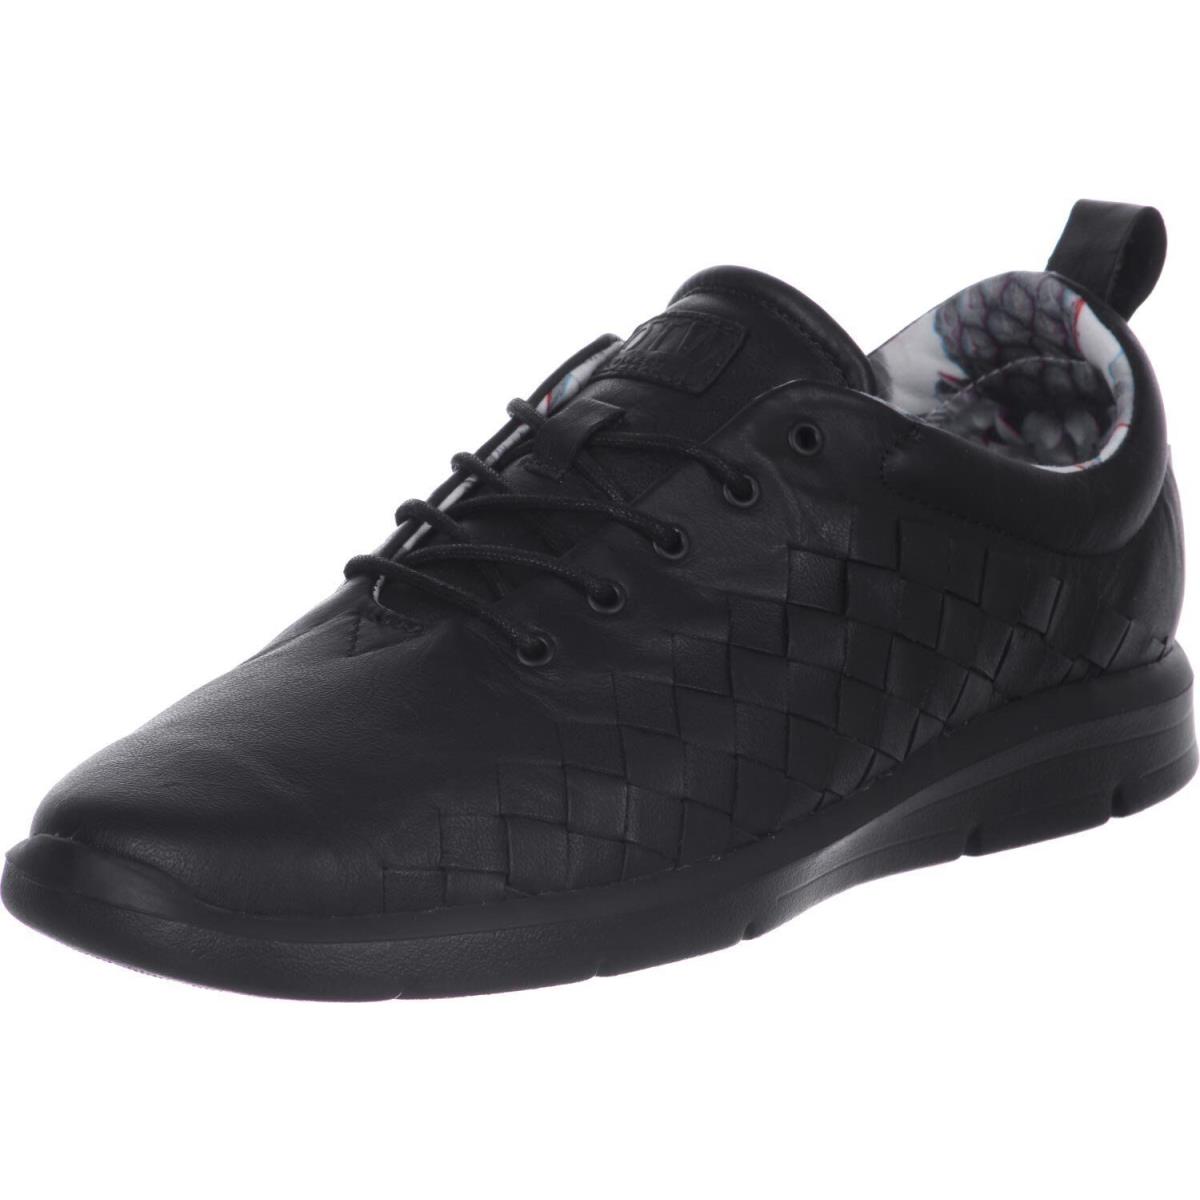 Vans Shoes Tesella 3D Aloha Black Leather Weave sz Size 11.5 Mens 29.5 CM Skate